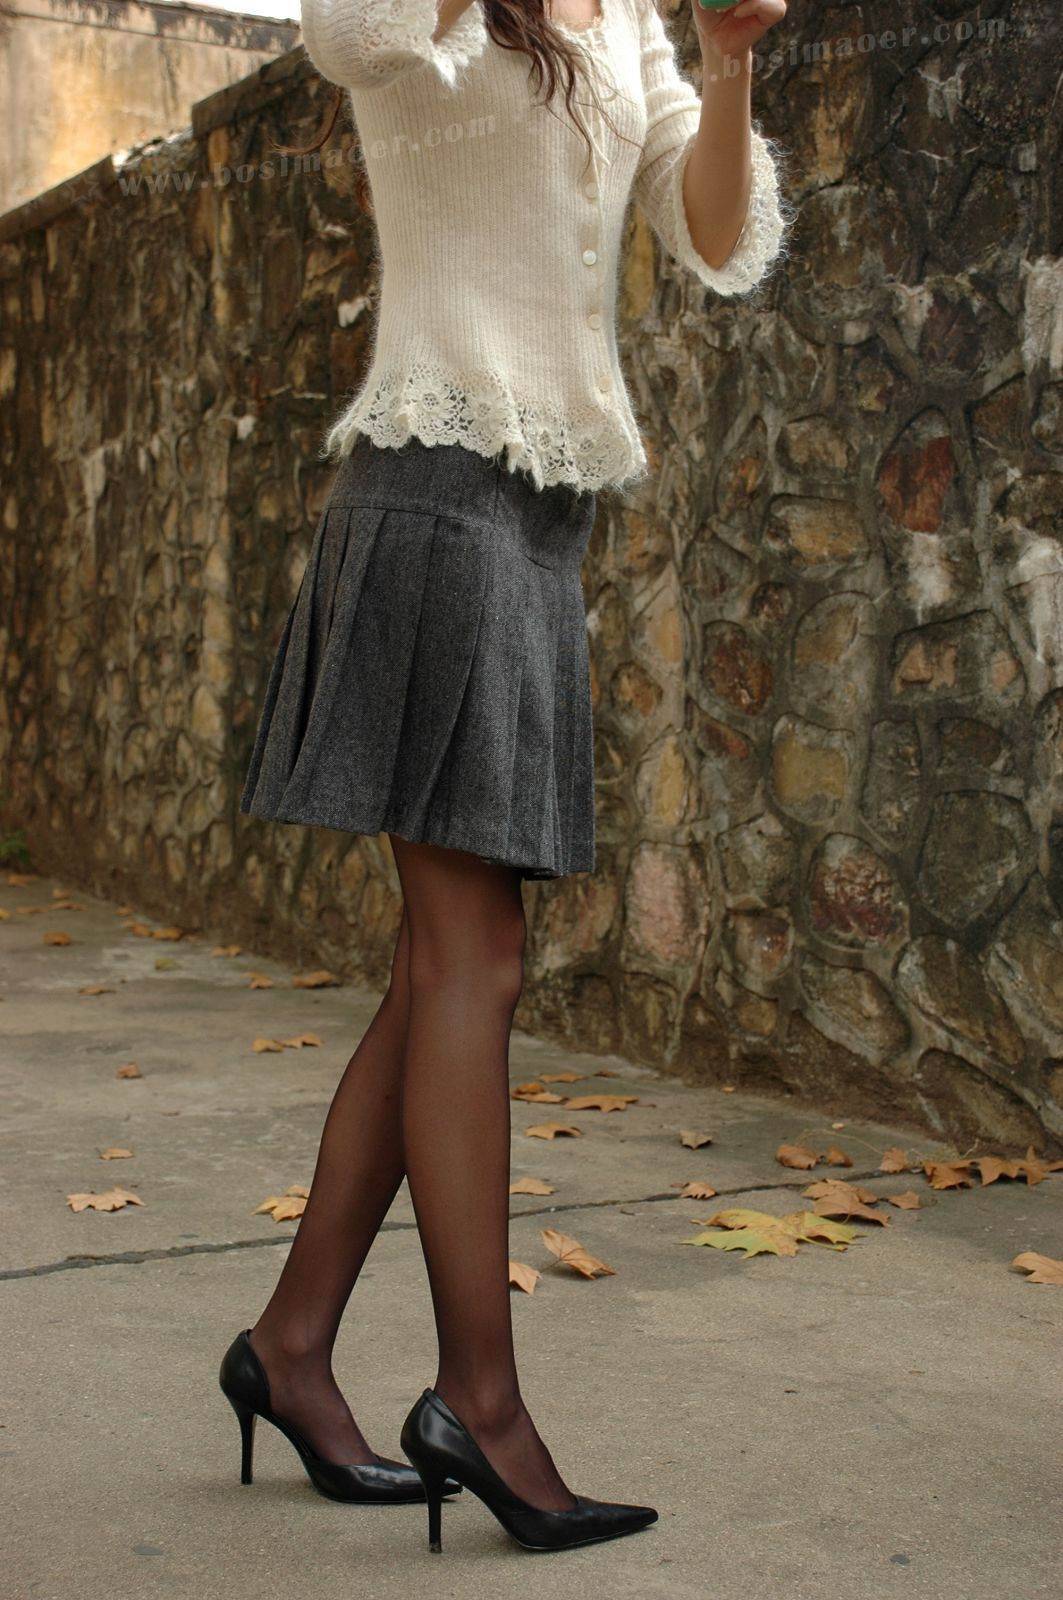 Short skirt silk stockings beauty Persian cat collection 33